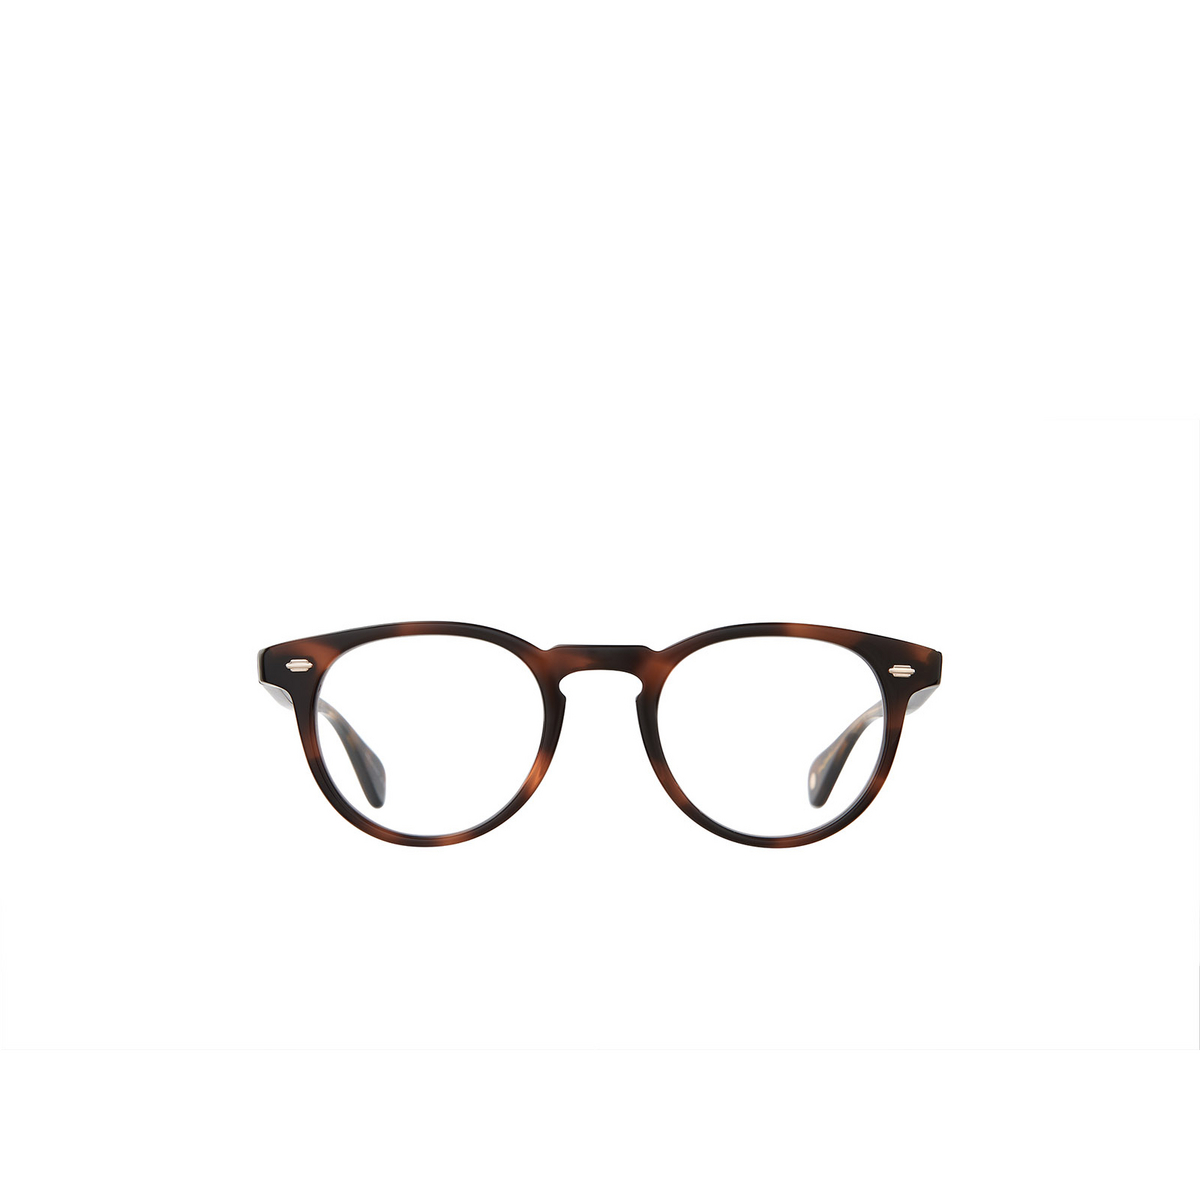 Garrett Leight HERCULES Eyeglasses SPBRNSH Spotted Brown Shell - front view